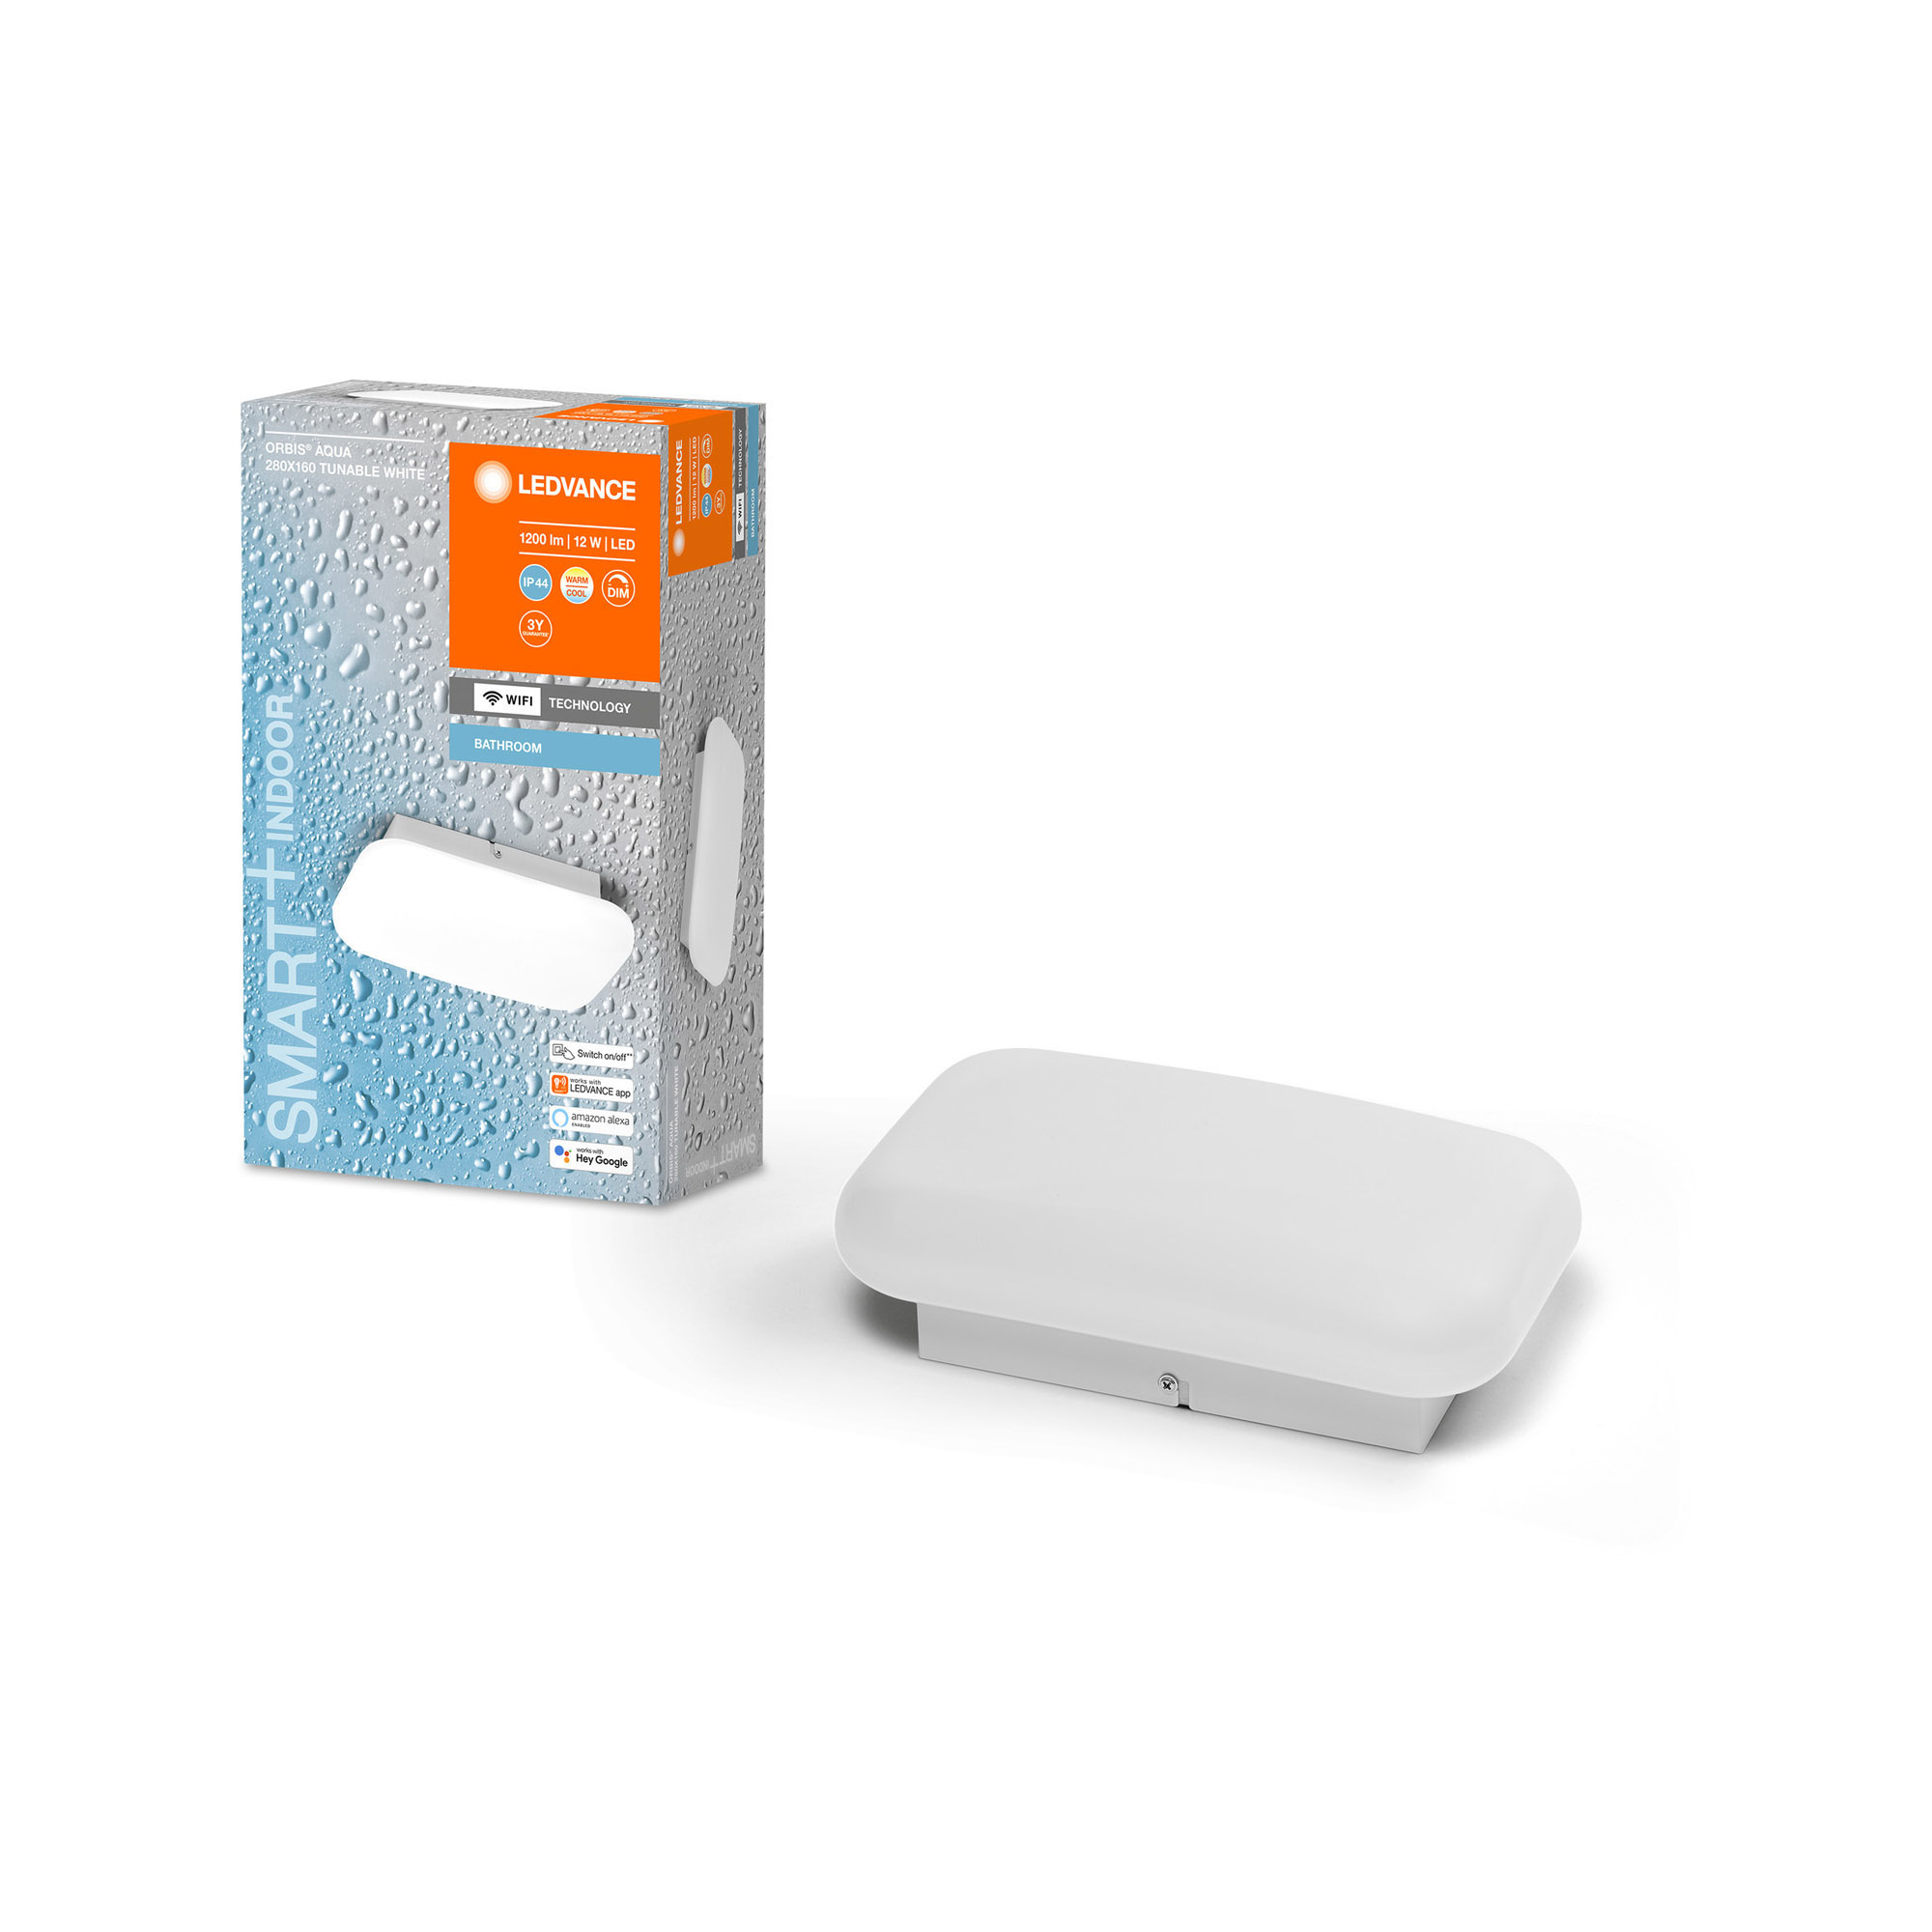 LEDVANCE SMART+ WiFi Tunable White LED Wall Light ORBIS Aqua 280x160mm IP44 white 1200lm